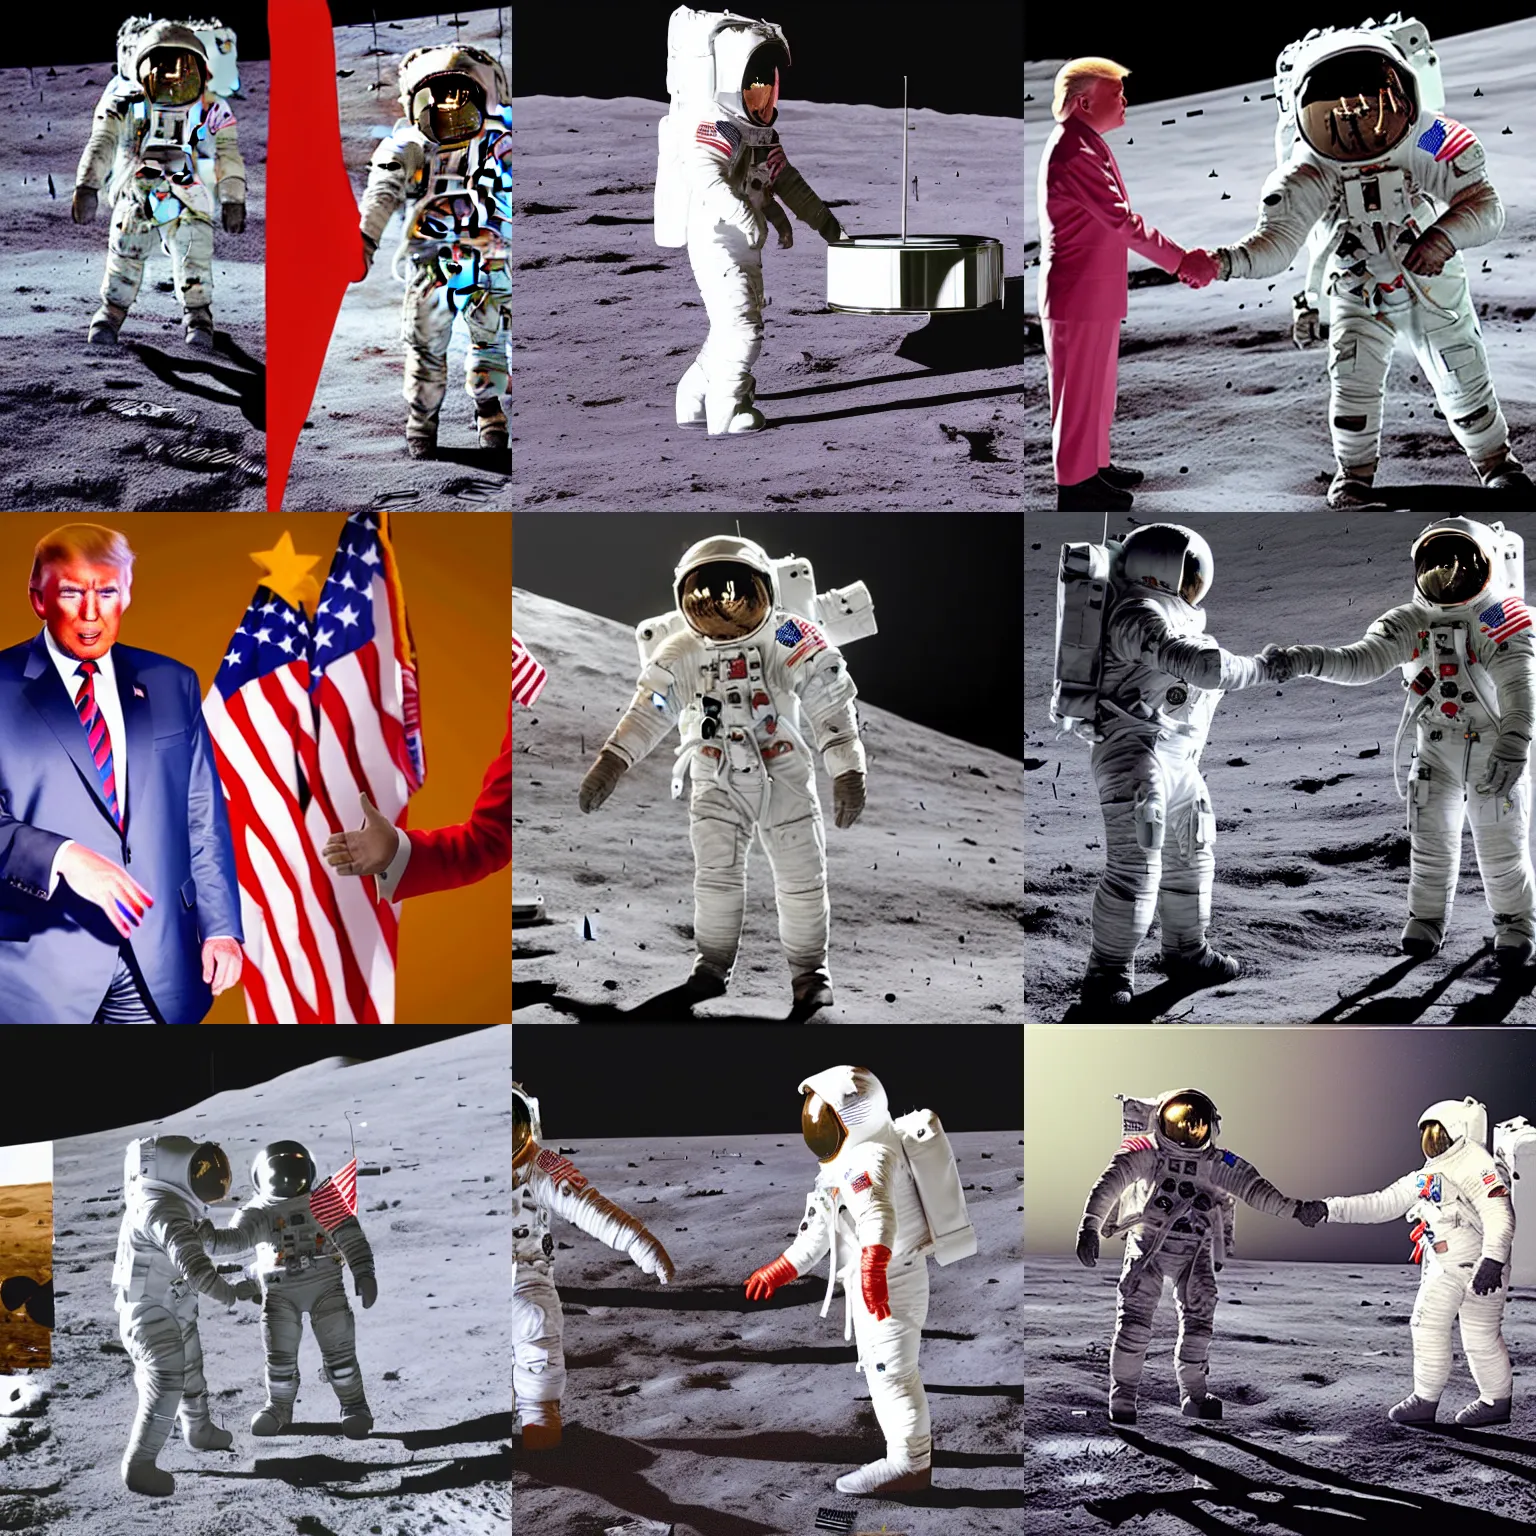 Prompt: hyperrealistic cinematic portrait donald trump shaking hands with joe biden on the moon, highly detailed maya render, 8 k